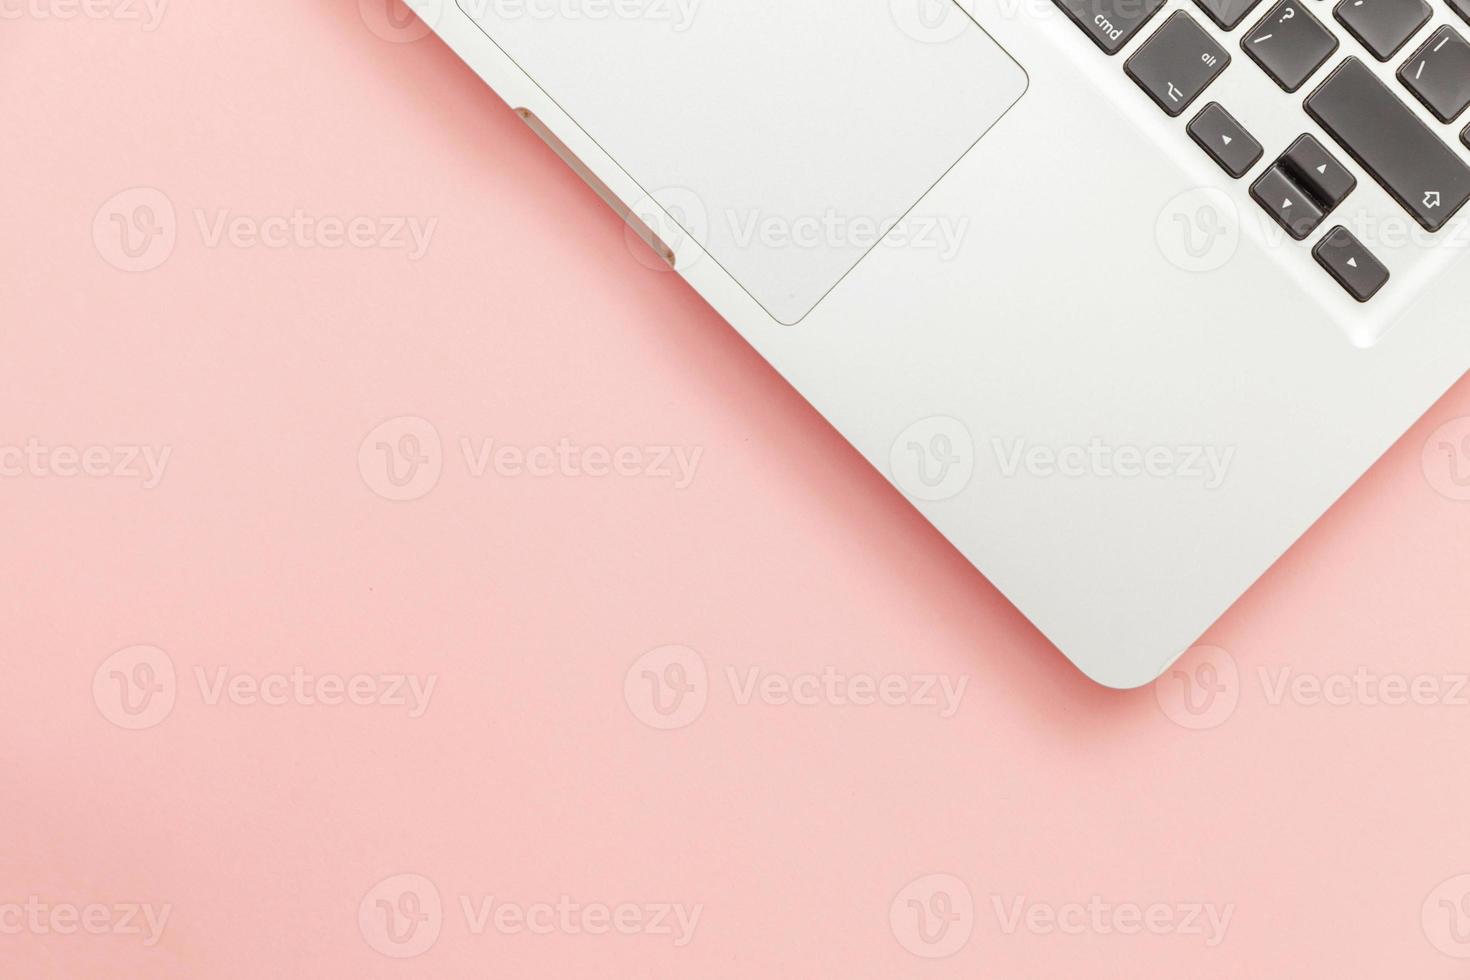 toetsenbord laptop computer geïsoleerd op roze pastel bureau achtergrond. moderne informatietechnologie en software-ontwikkelingen foto